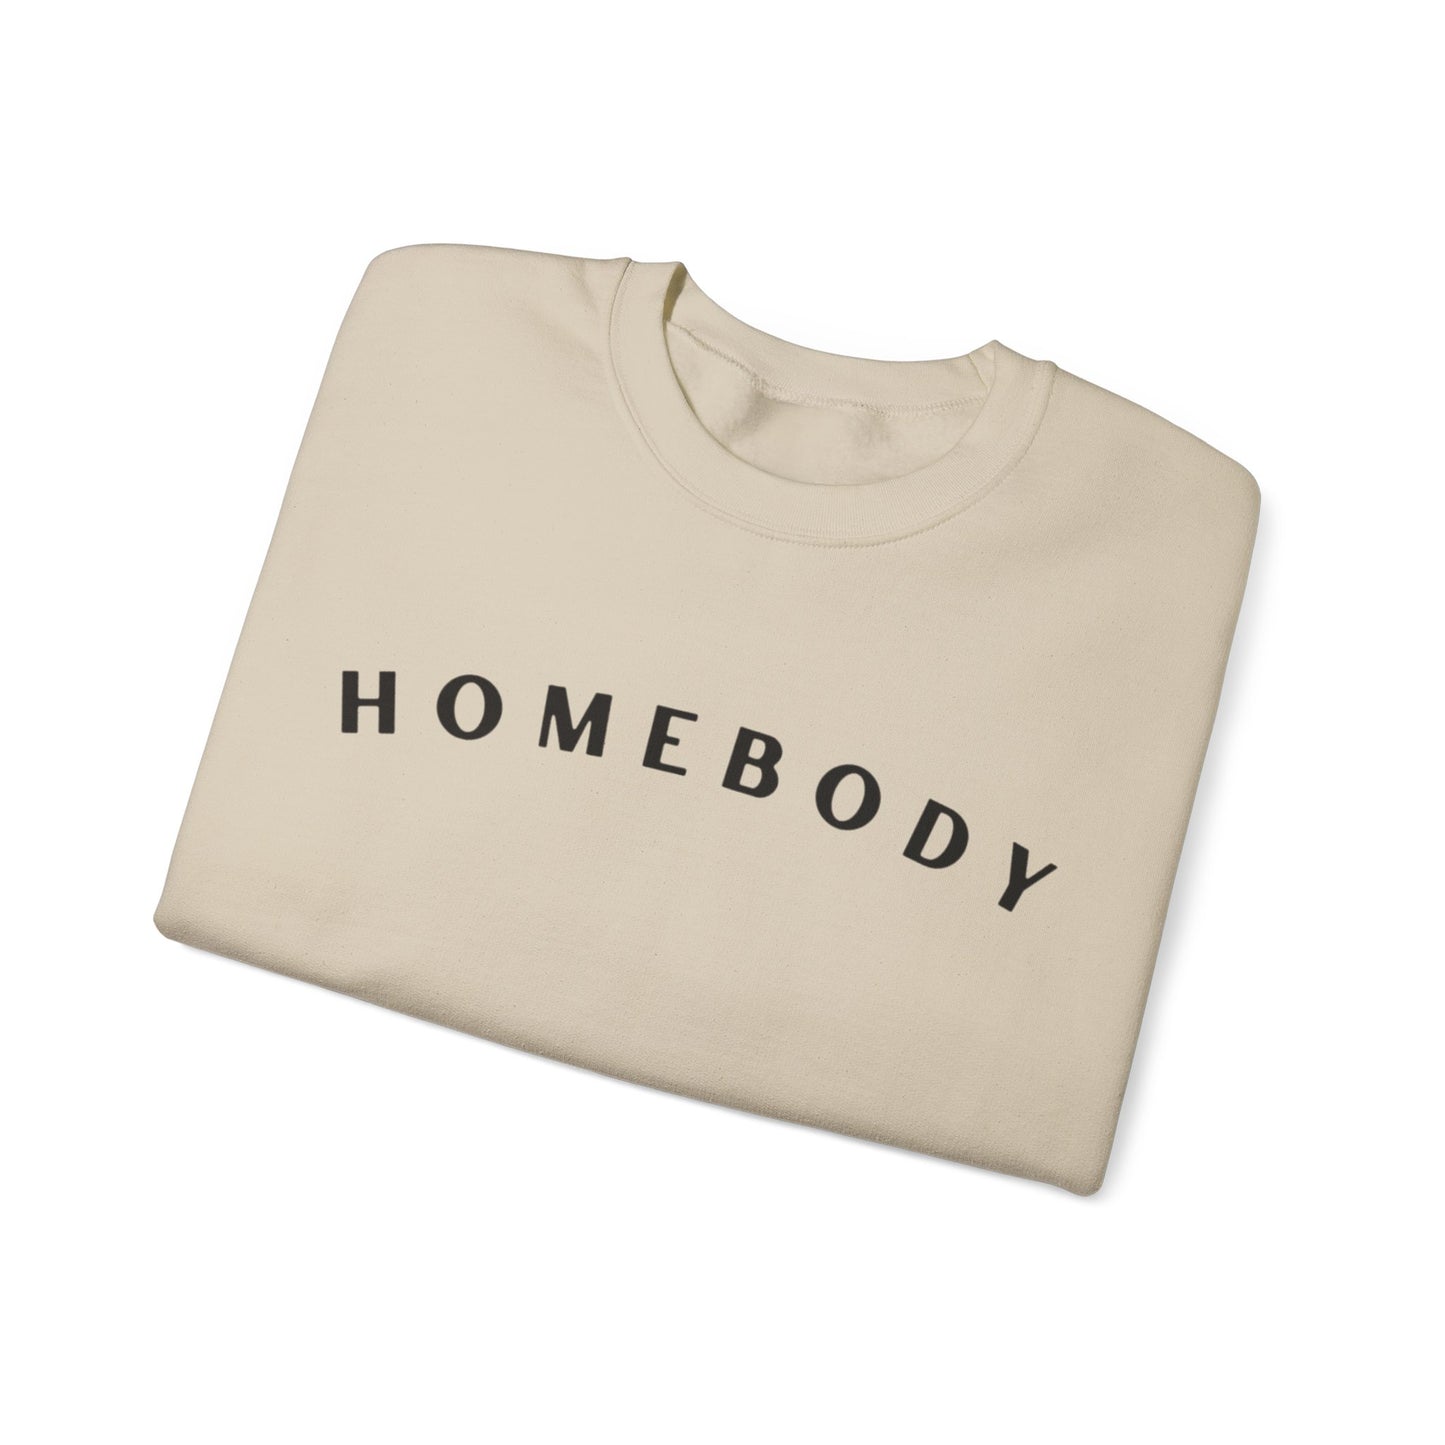 HOMEBODY - Unisex Heavy Blend™ Crewneck Sweatshirt